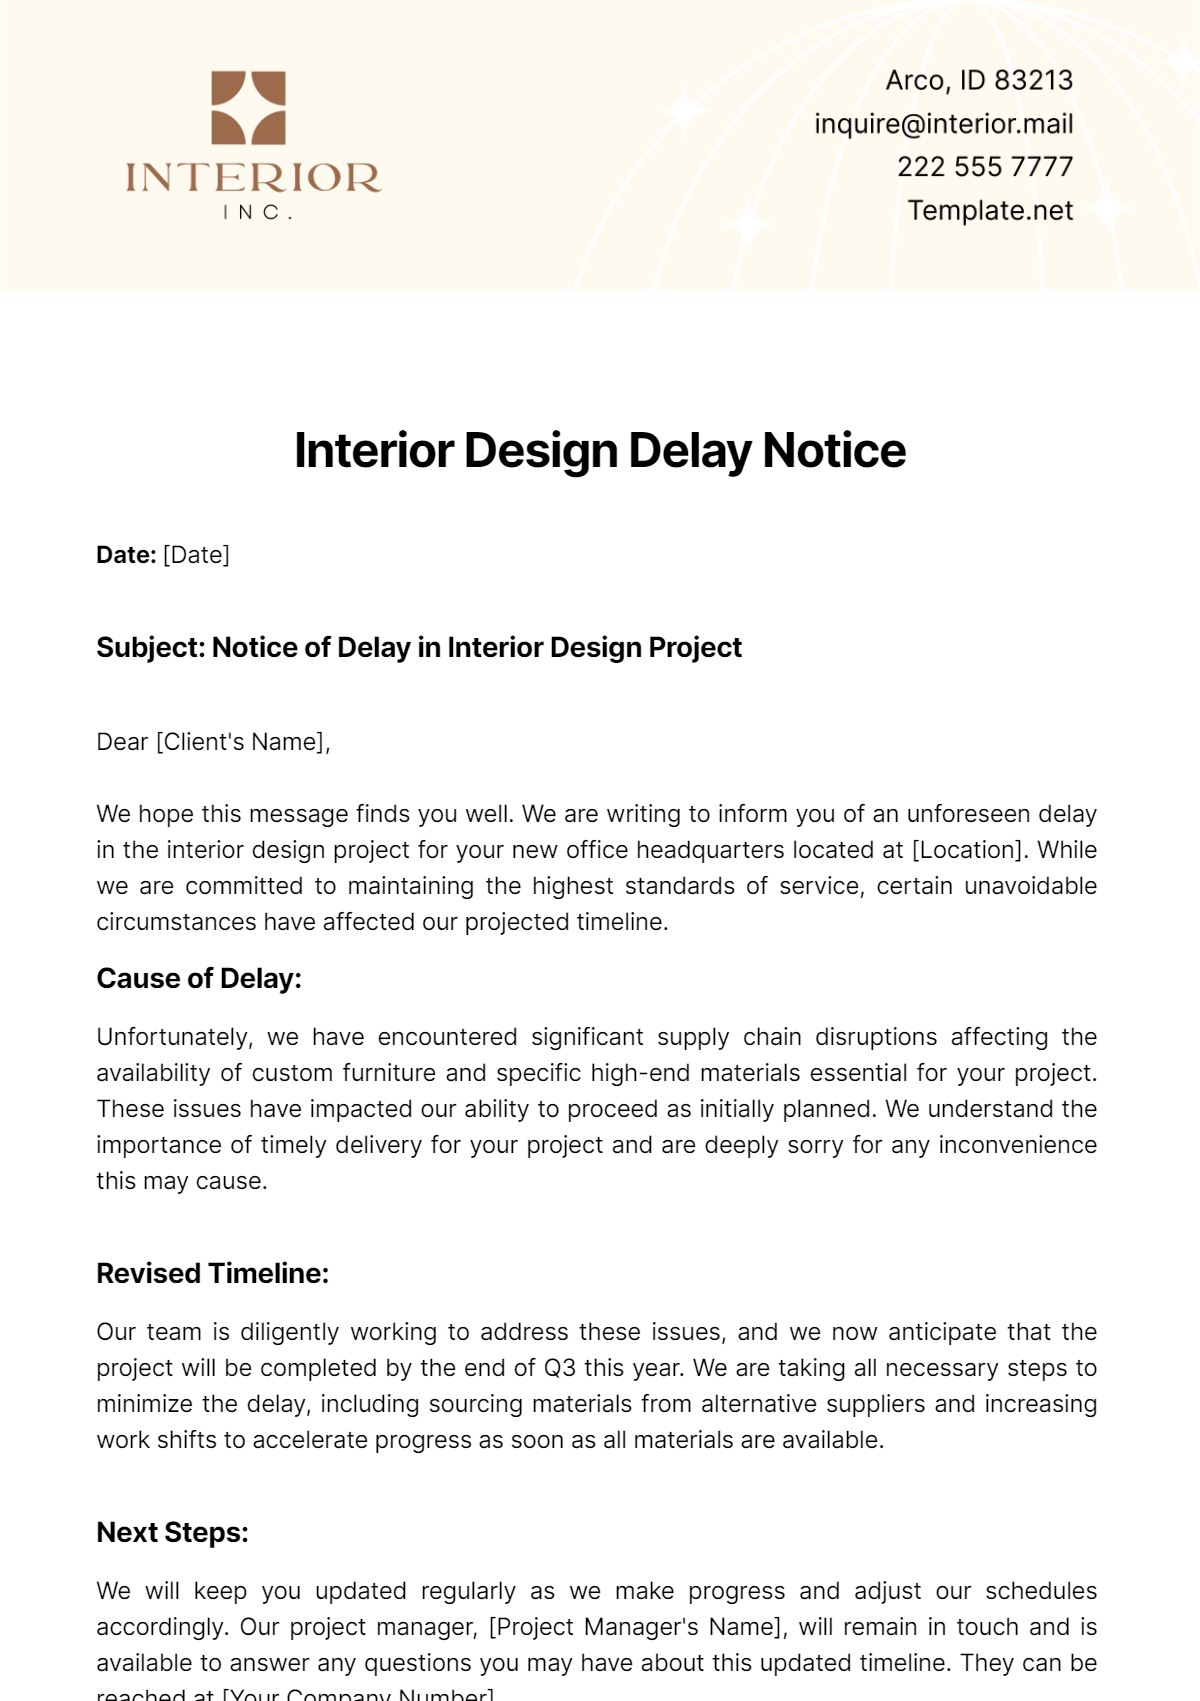 Free Interior Design Delay Notice Template